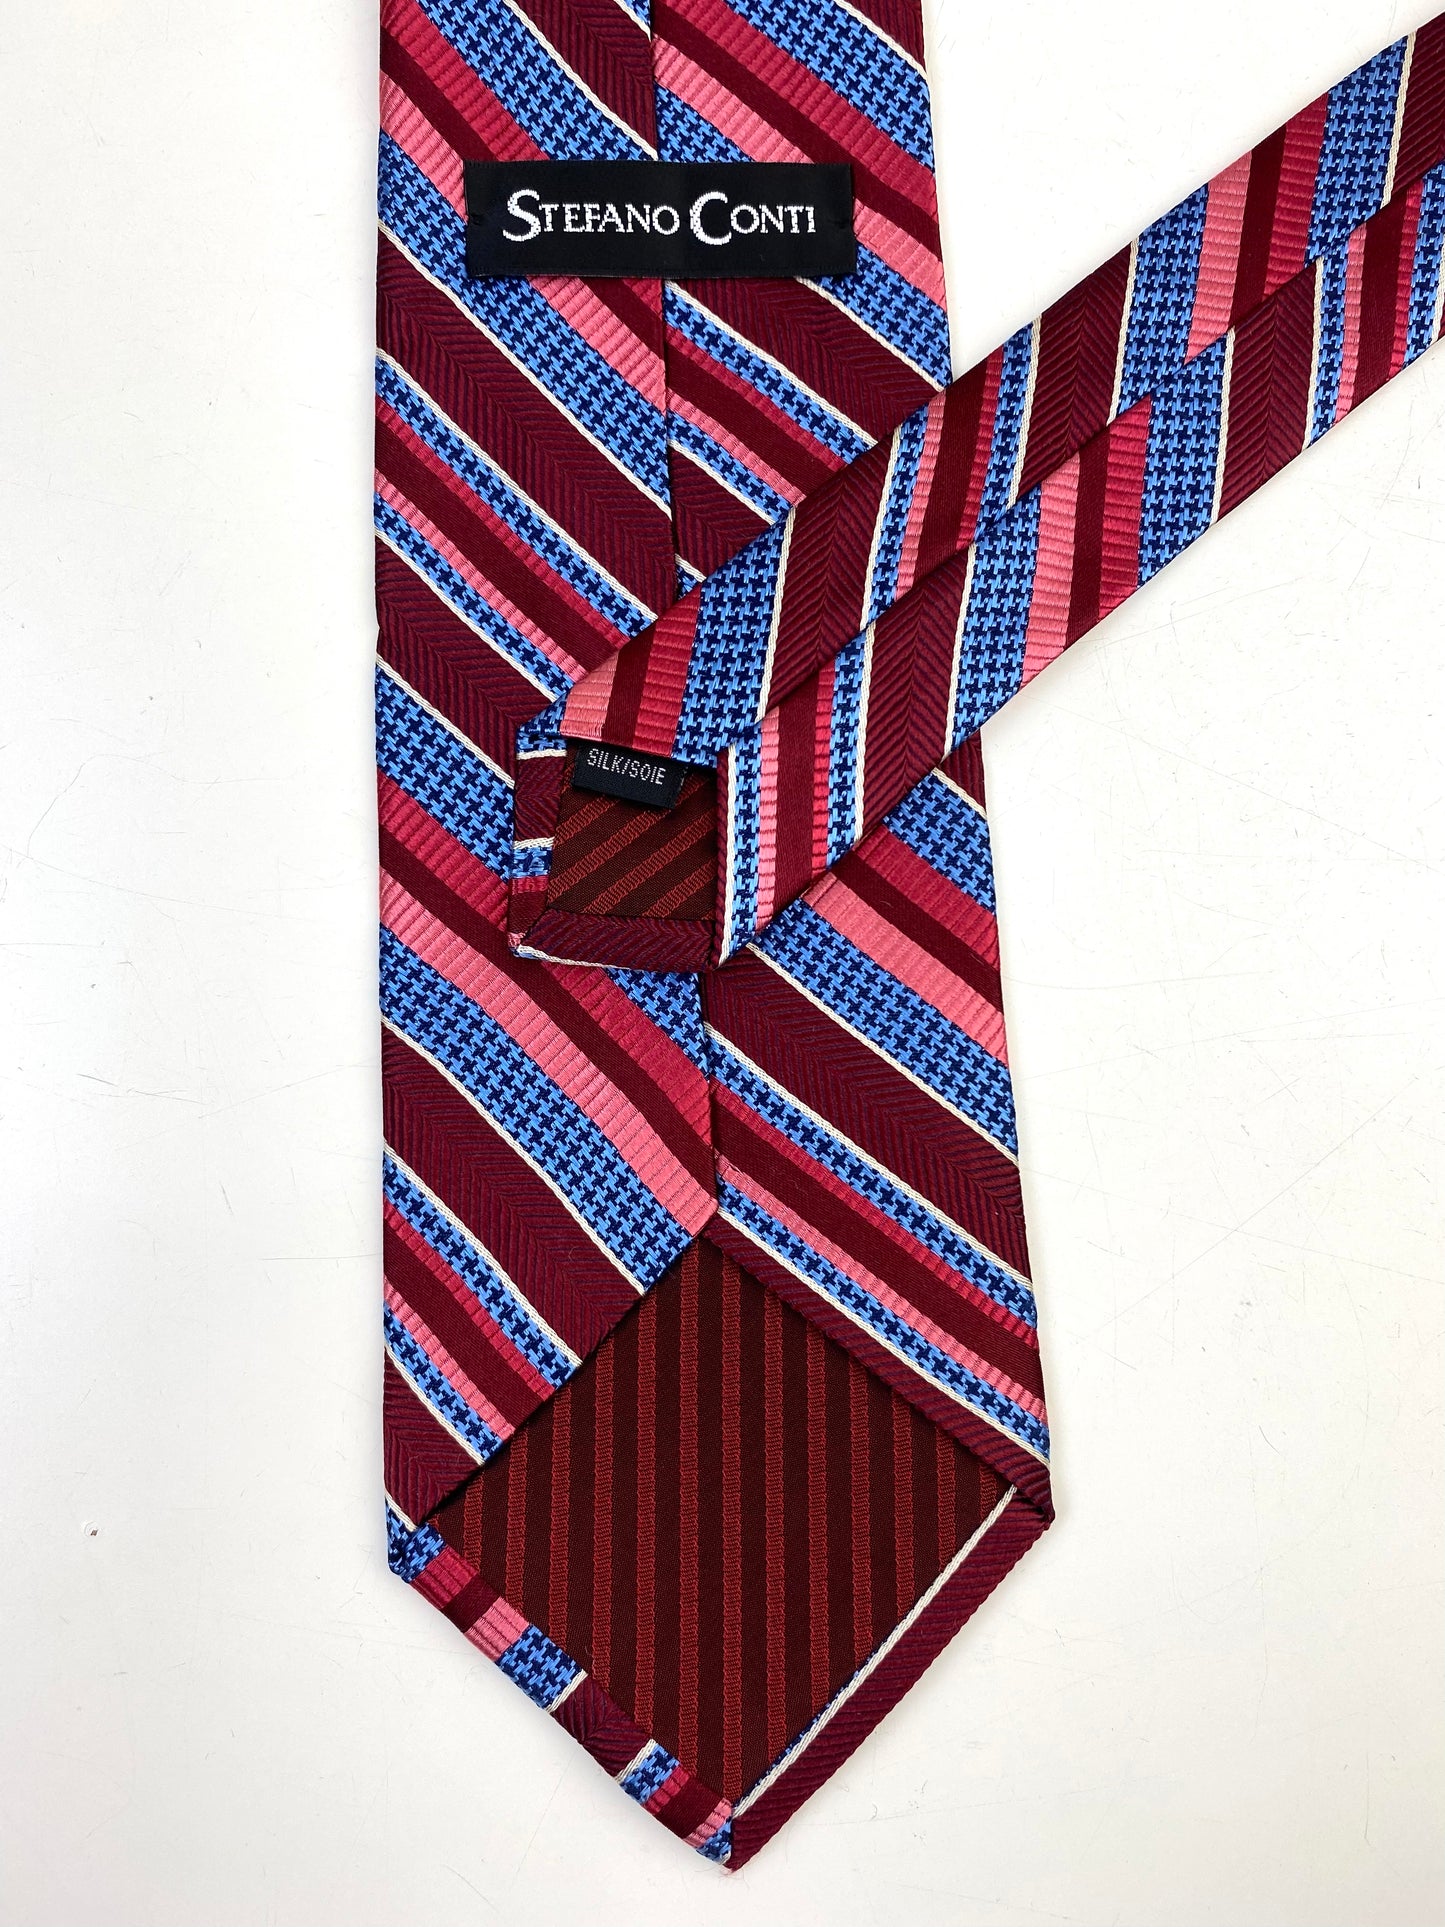 90s Deadstock Silk Necktie, Men's Vintage Red/ Blue Diagonal Stripe Pattern Tie, NOS